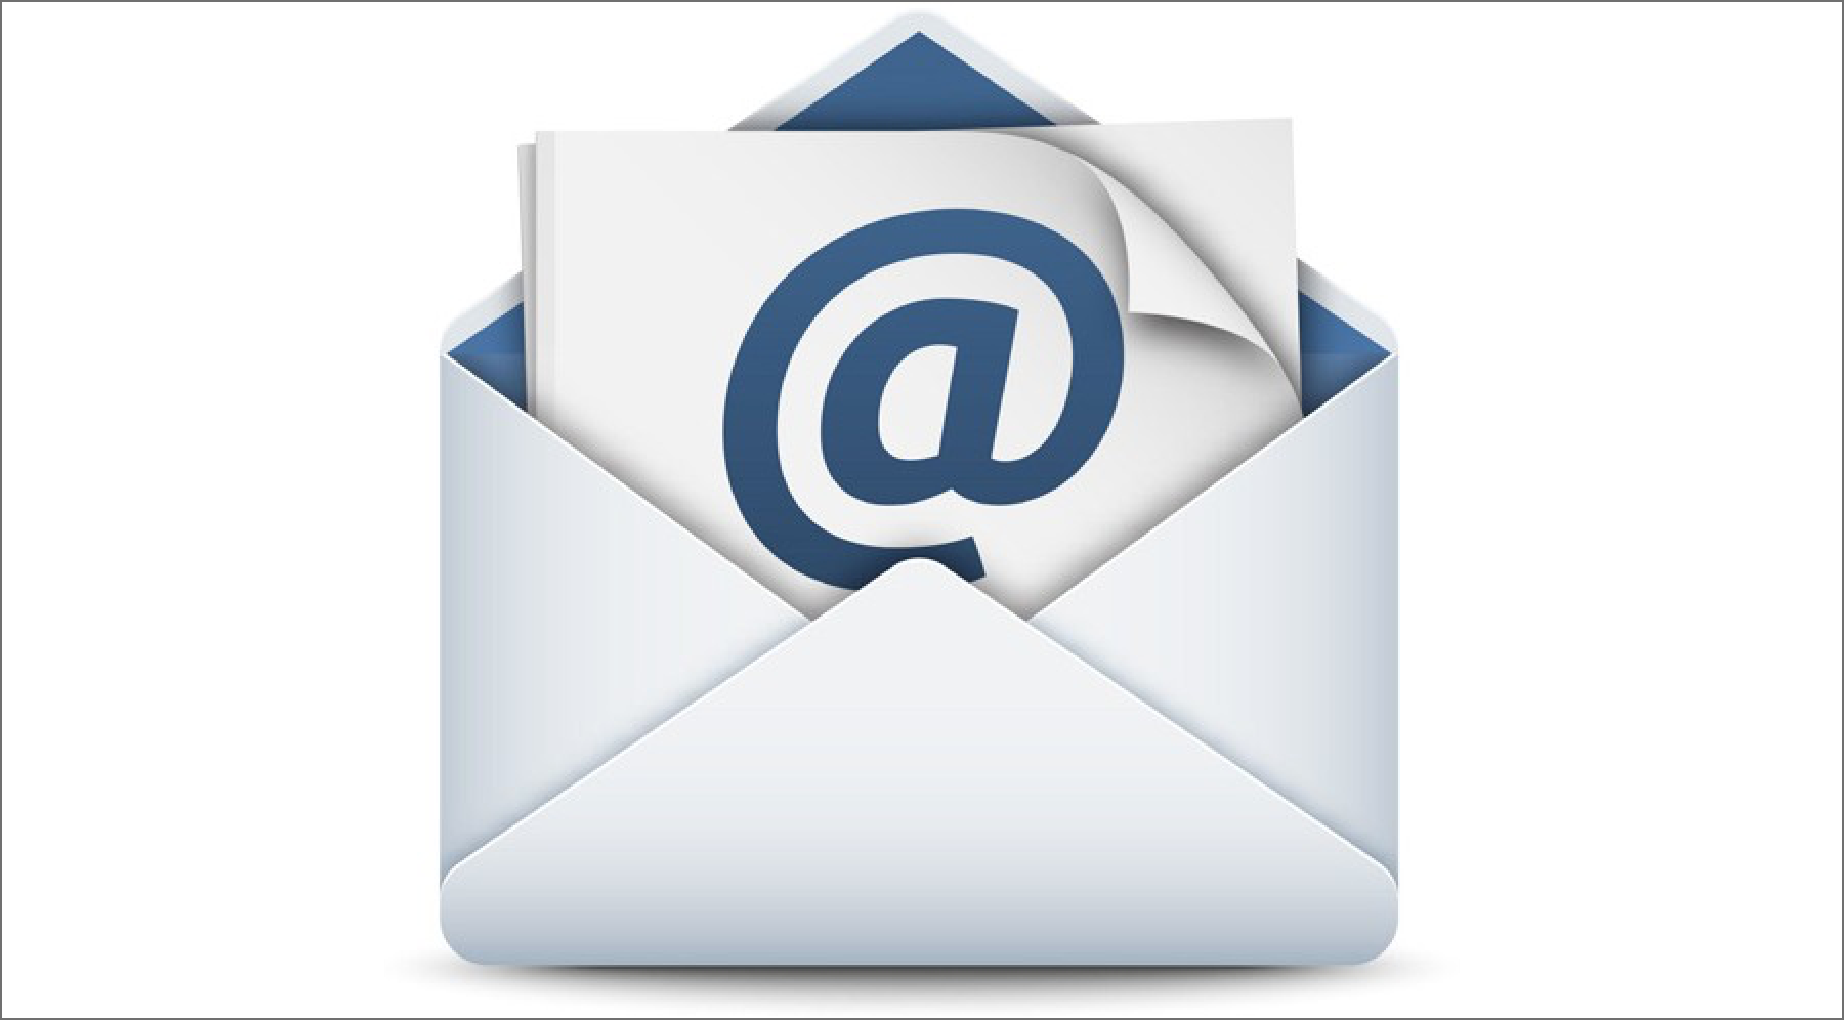 @: a symbol sets off an e-mail revolution